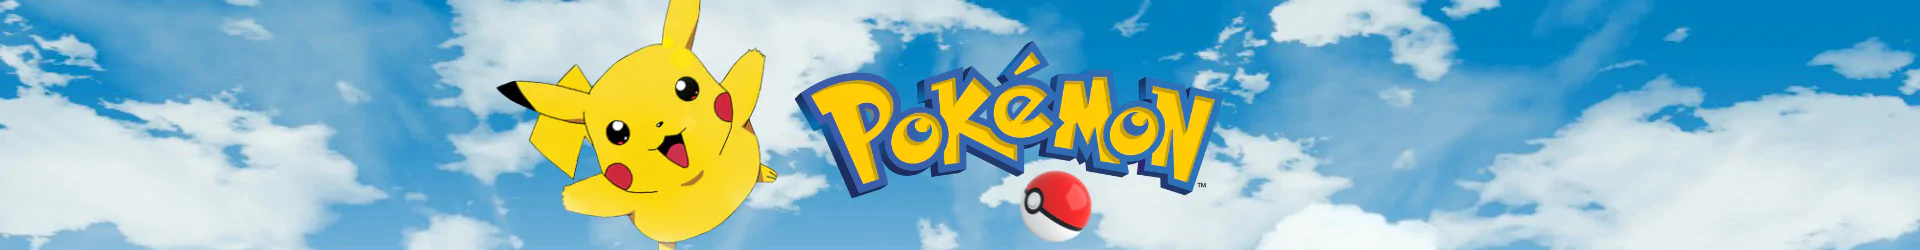 Pokemon játékok banner